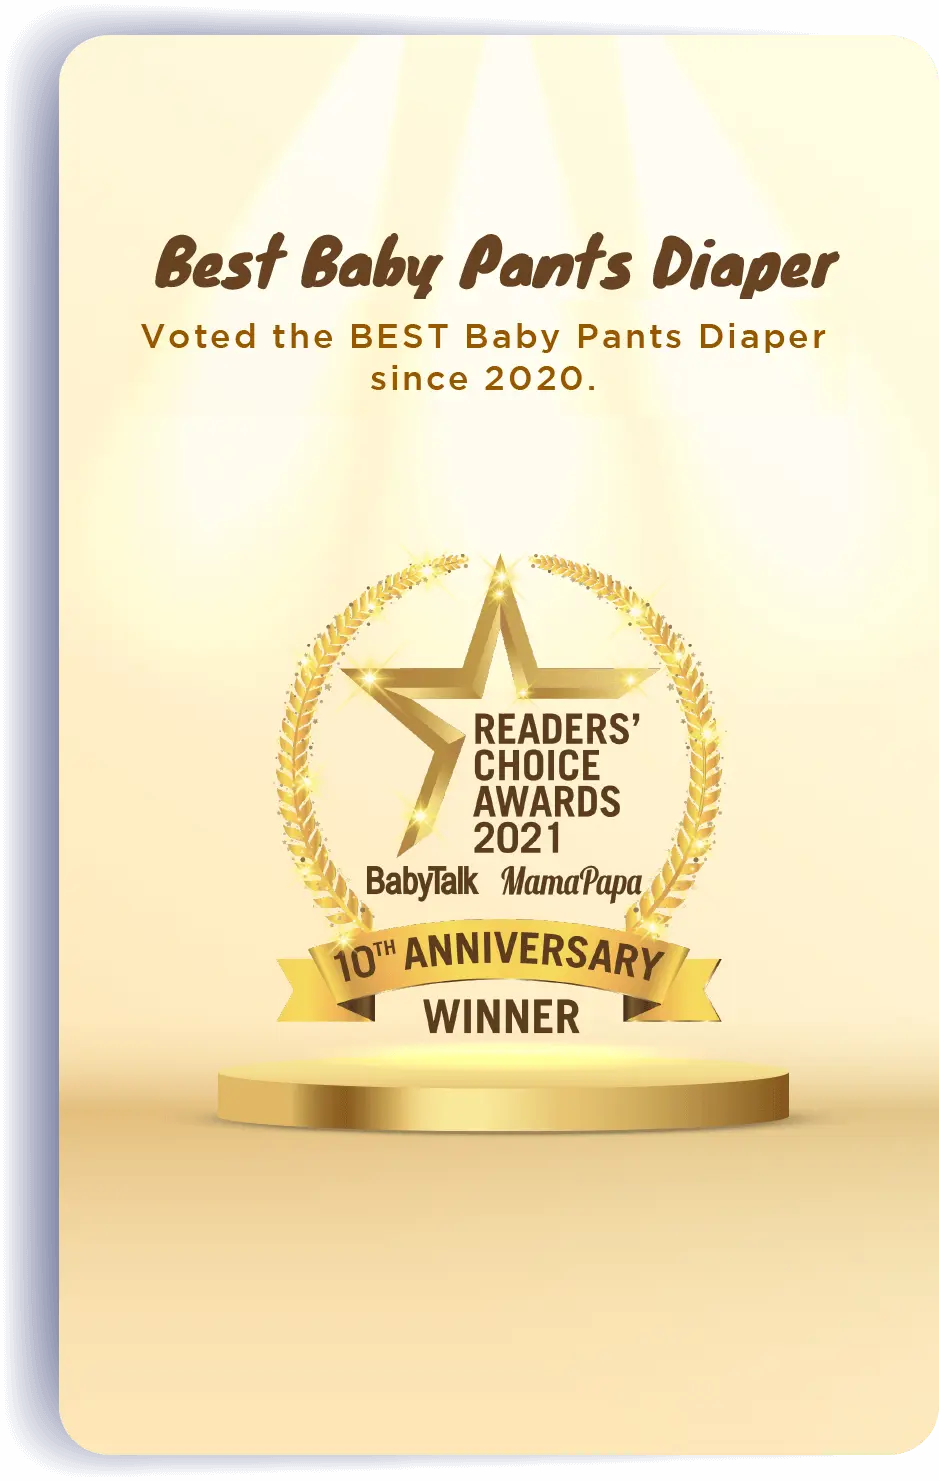 Best Baby Pants Diaper: Best Baby Pants Diaper by the Readers' Choice Awards 2020
                